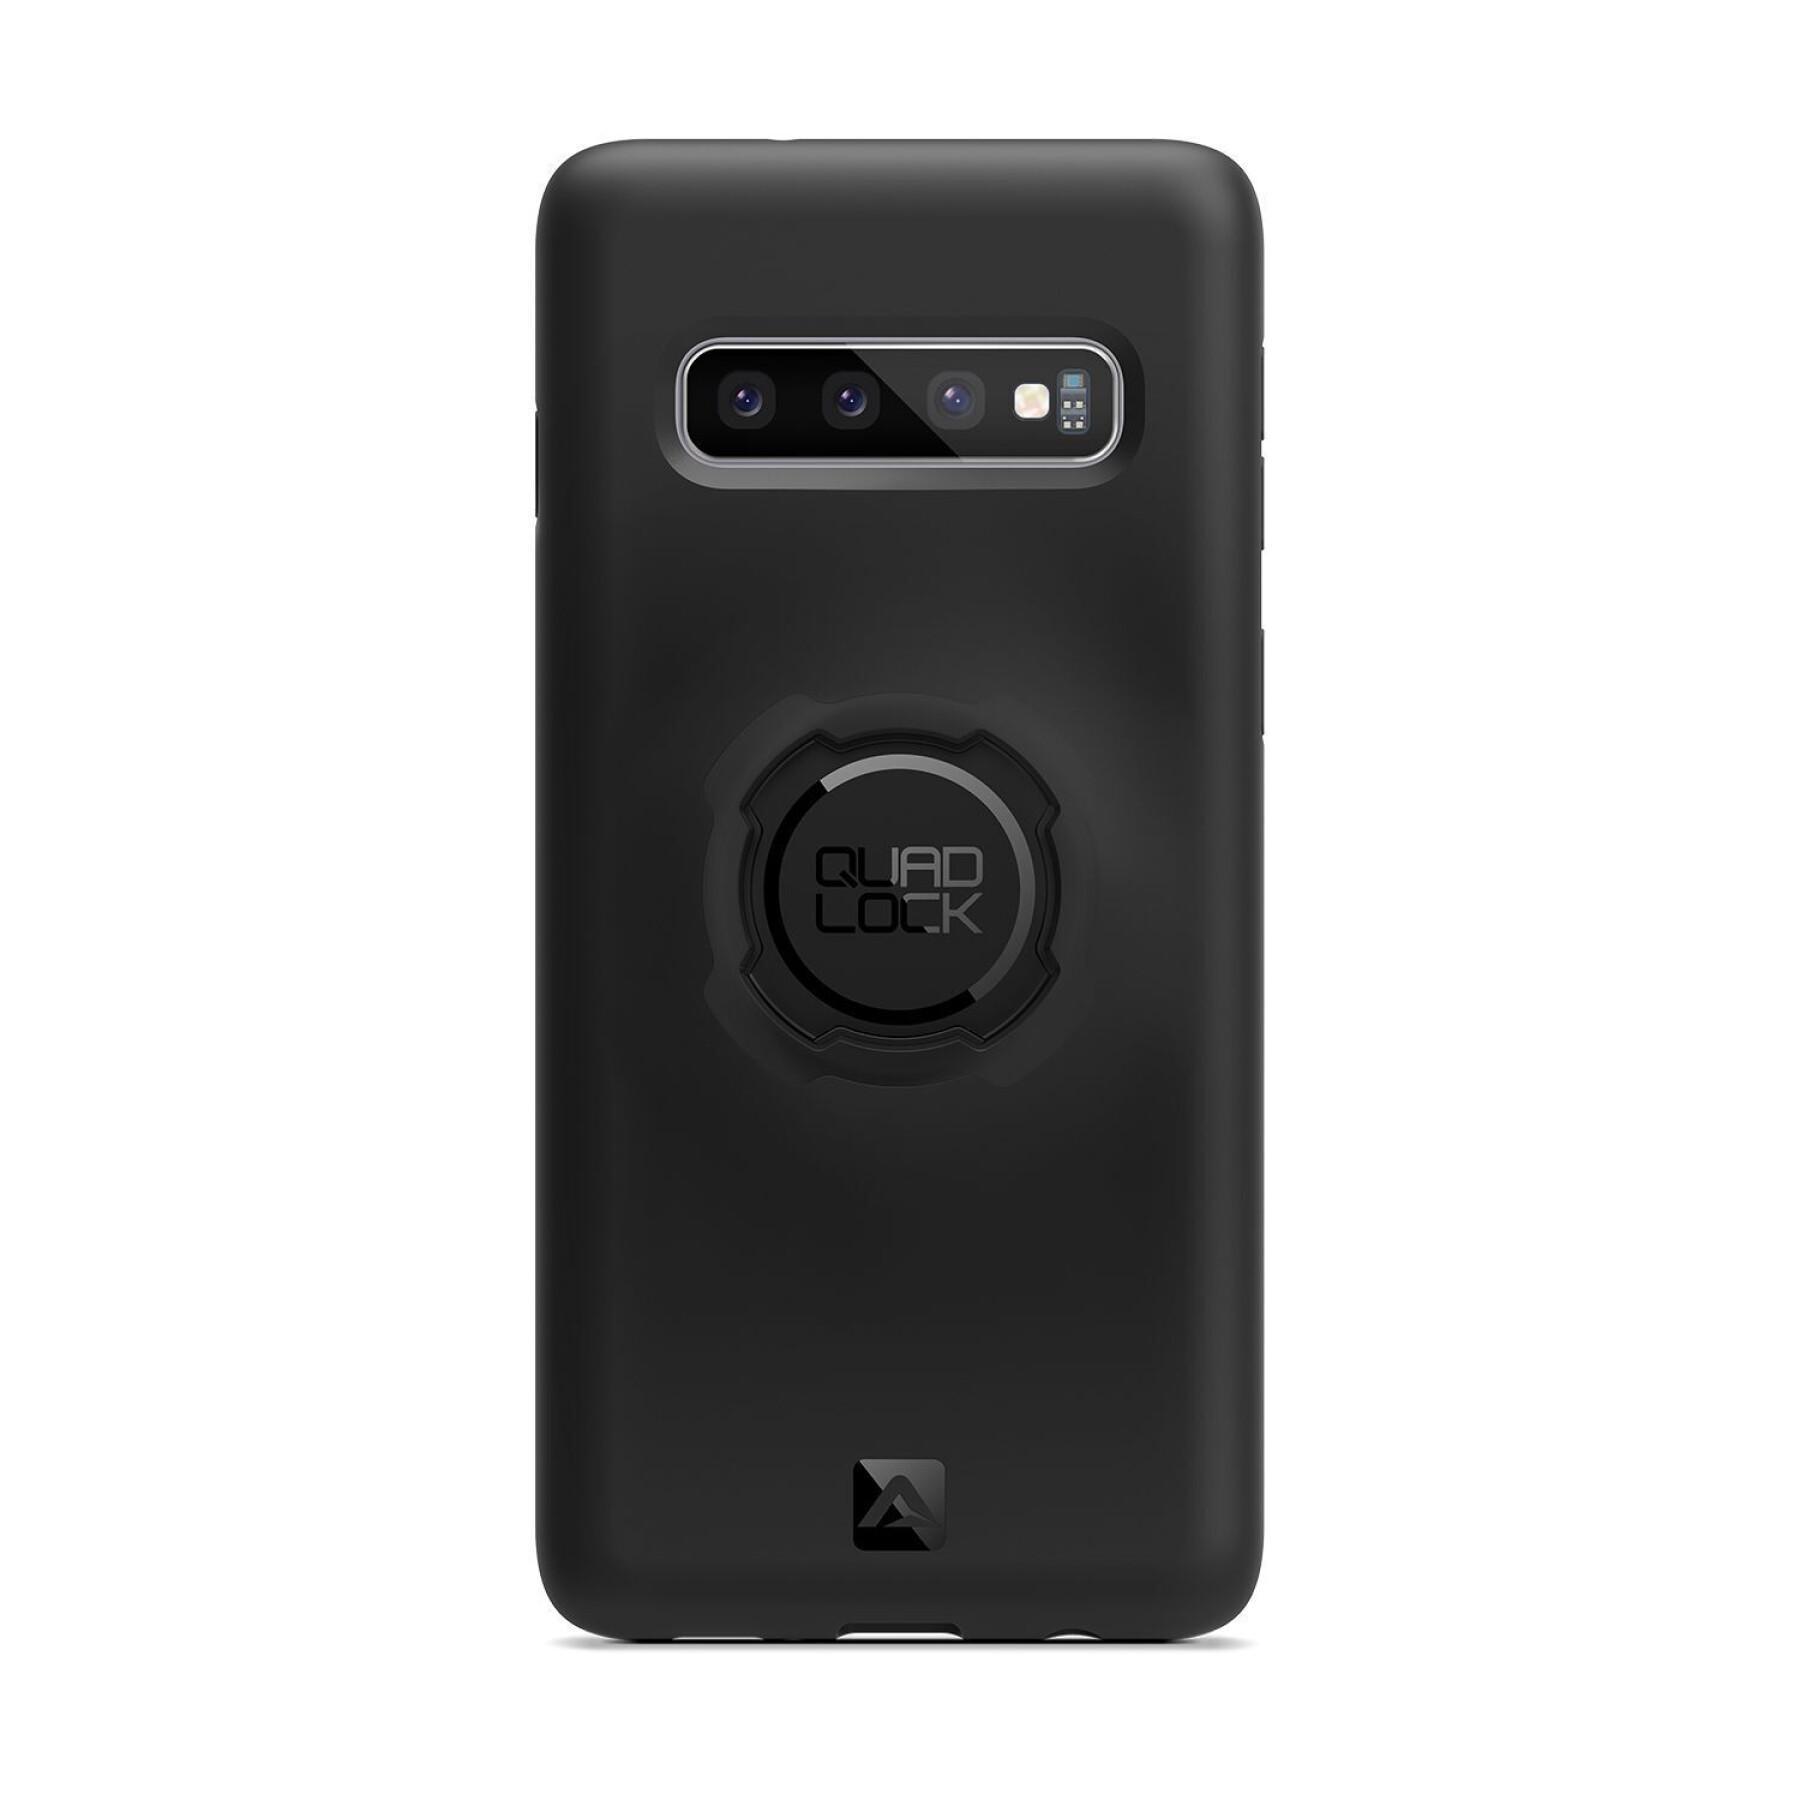 Smartphone-Hülle Quad Lock Galaxy S10